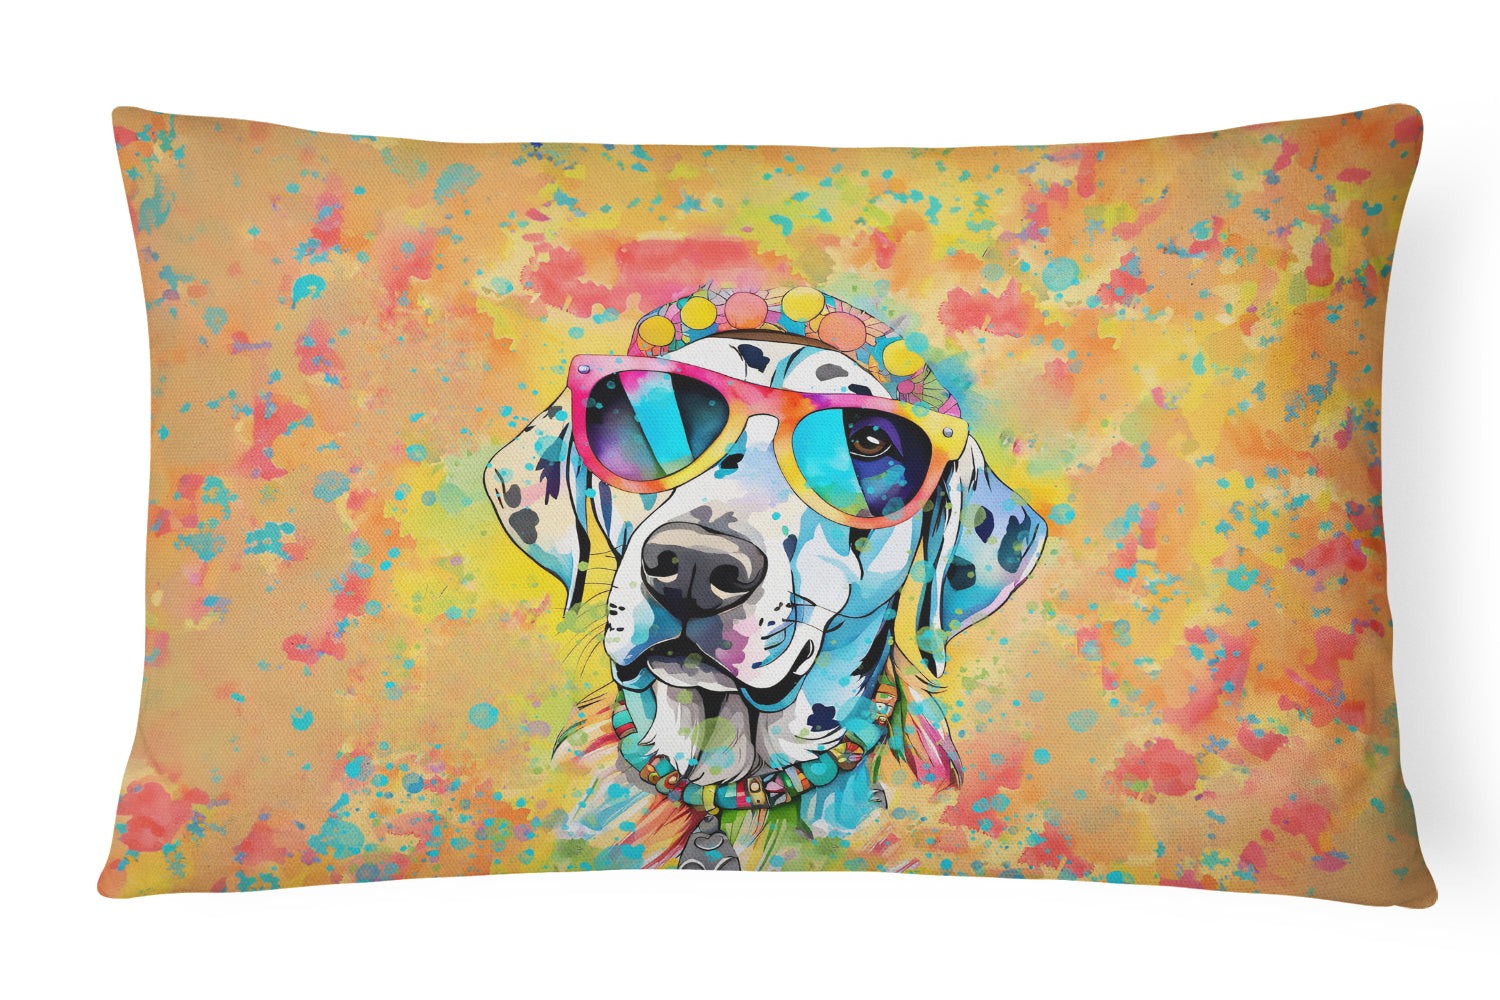 Buy this Dalmatian Hippie Dawg Fabric Decorative Pillow